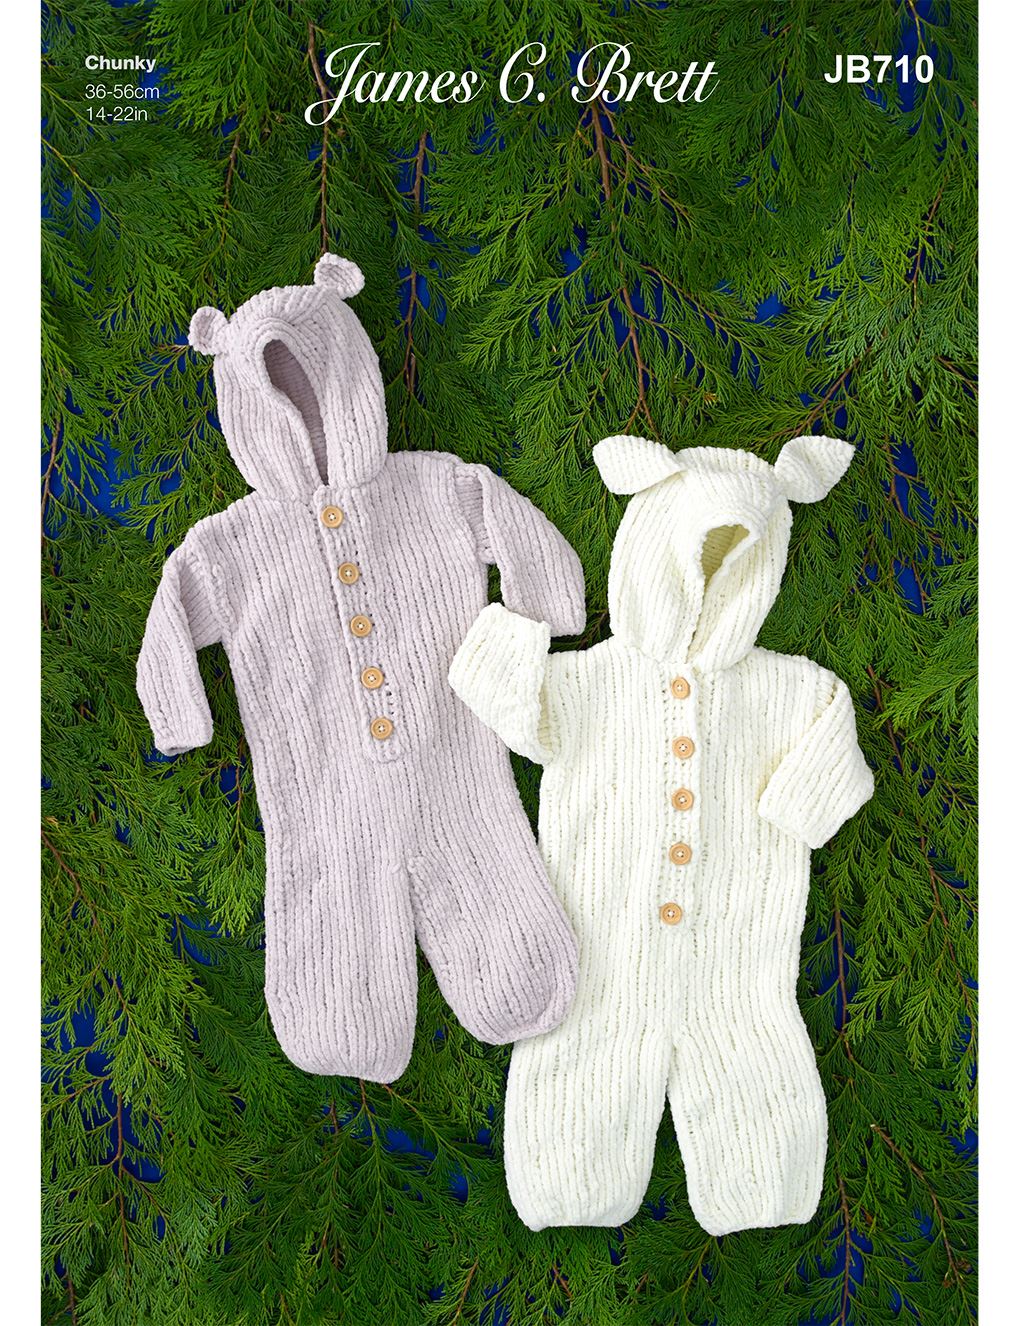 James C Brett Flutterby knitting pattern (JB710) bear and rabbit all-in-one